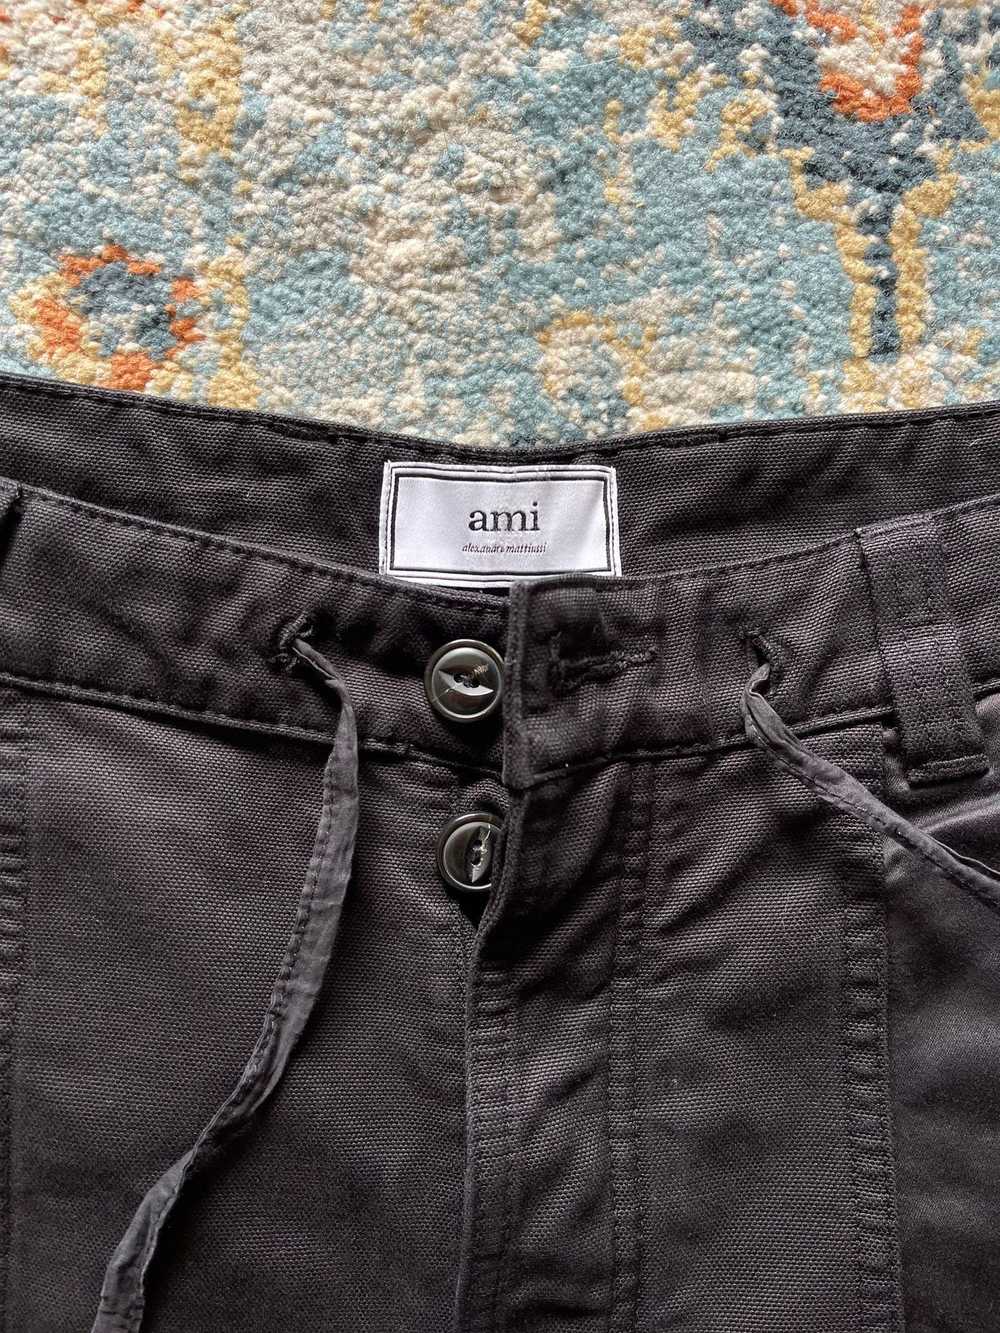 AMI Cargo pants - image 2